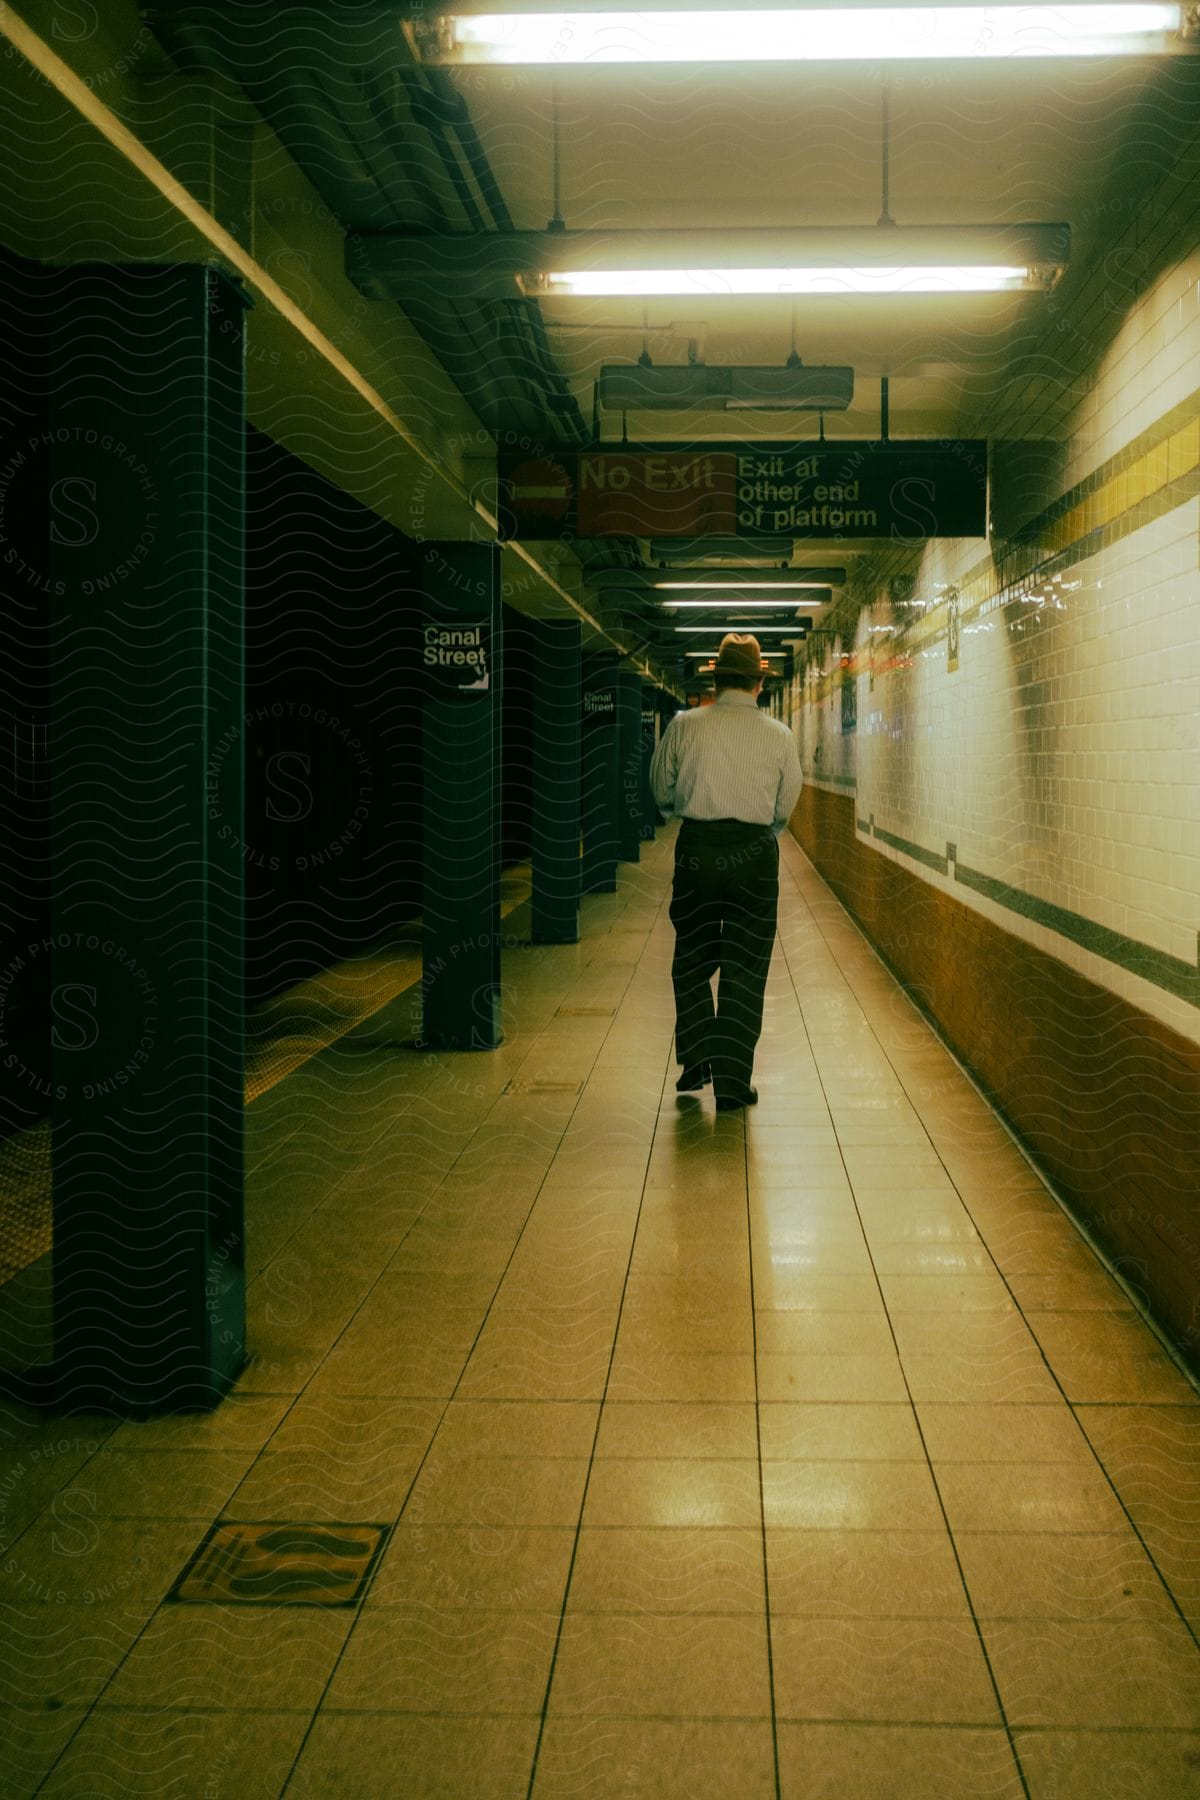 A man wearing a brown hat white shirt and black pants walks along a subway platform